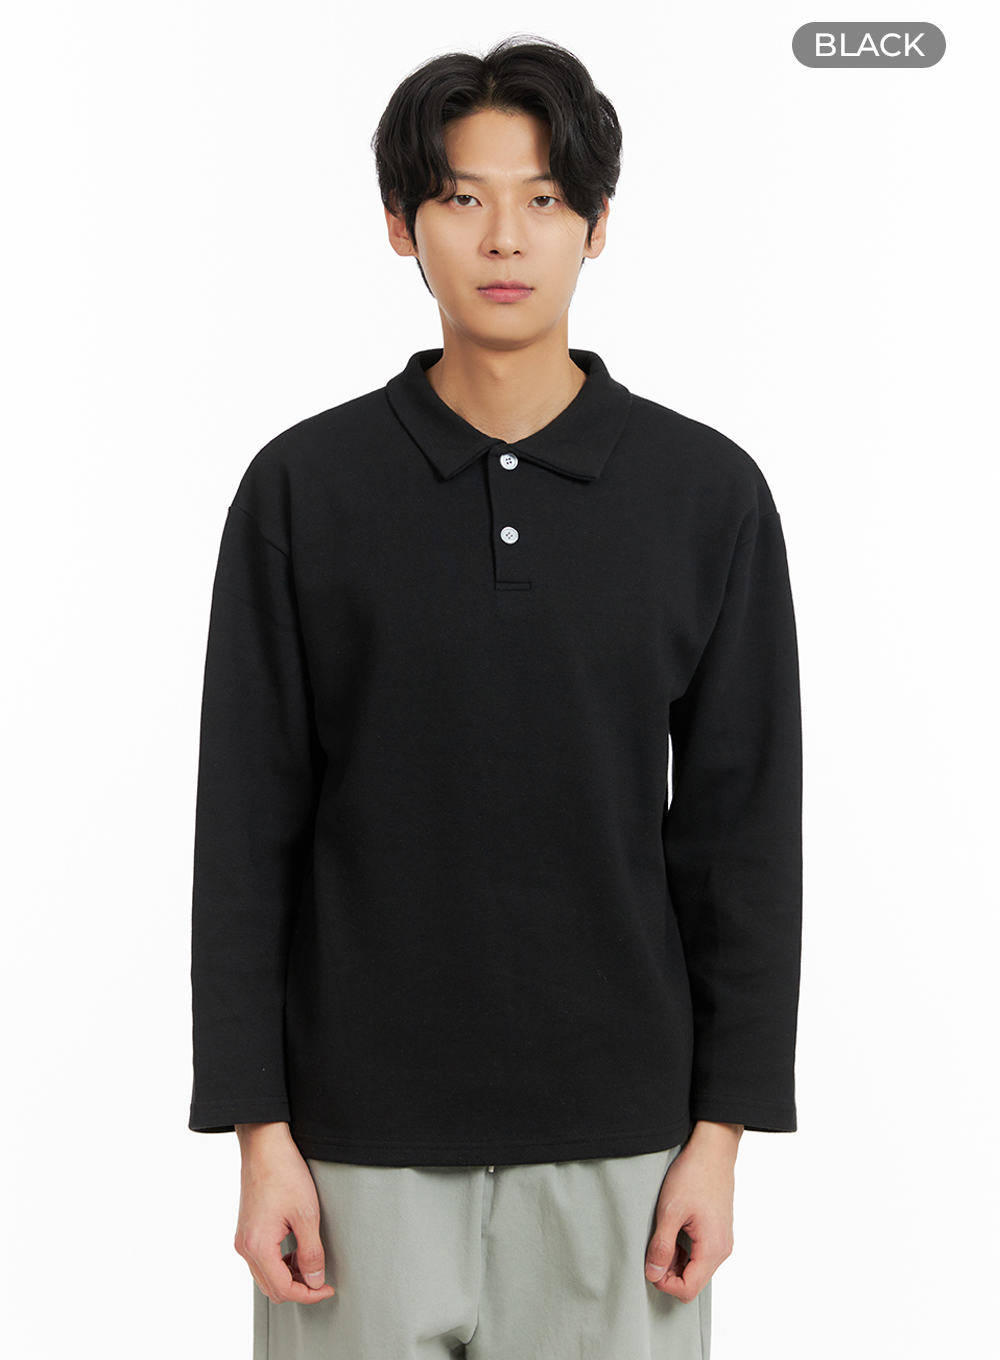 mens-long-sleeve-polo-shirt-ia402 / Black